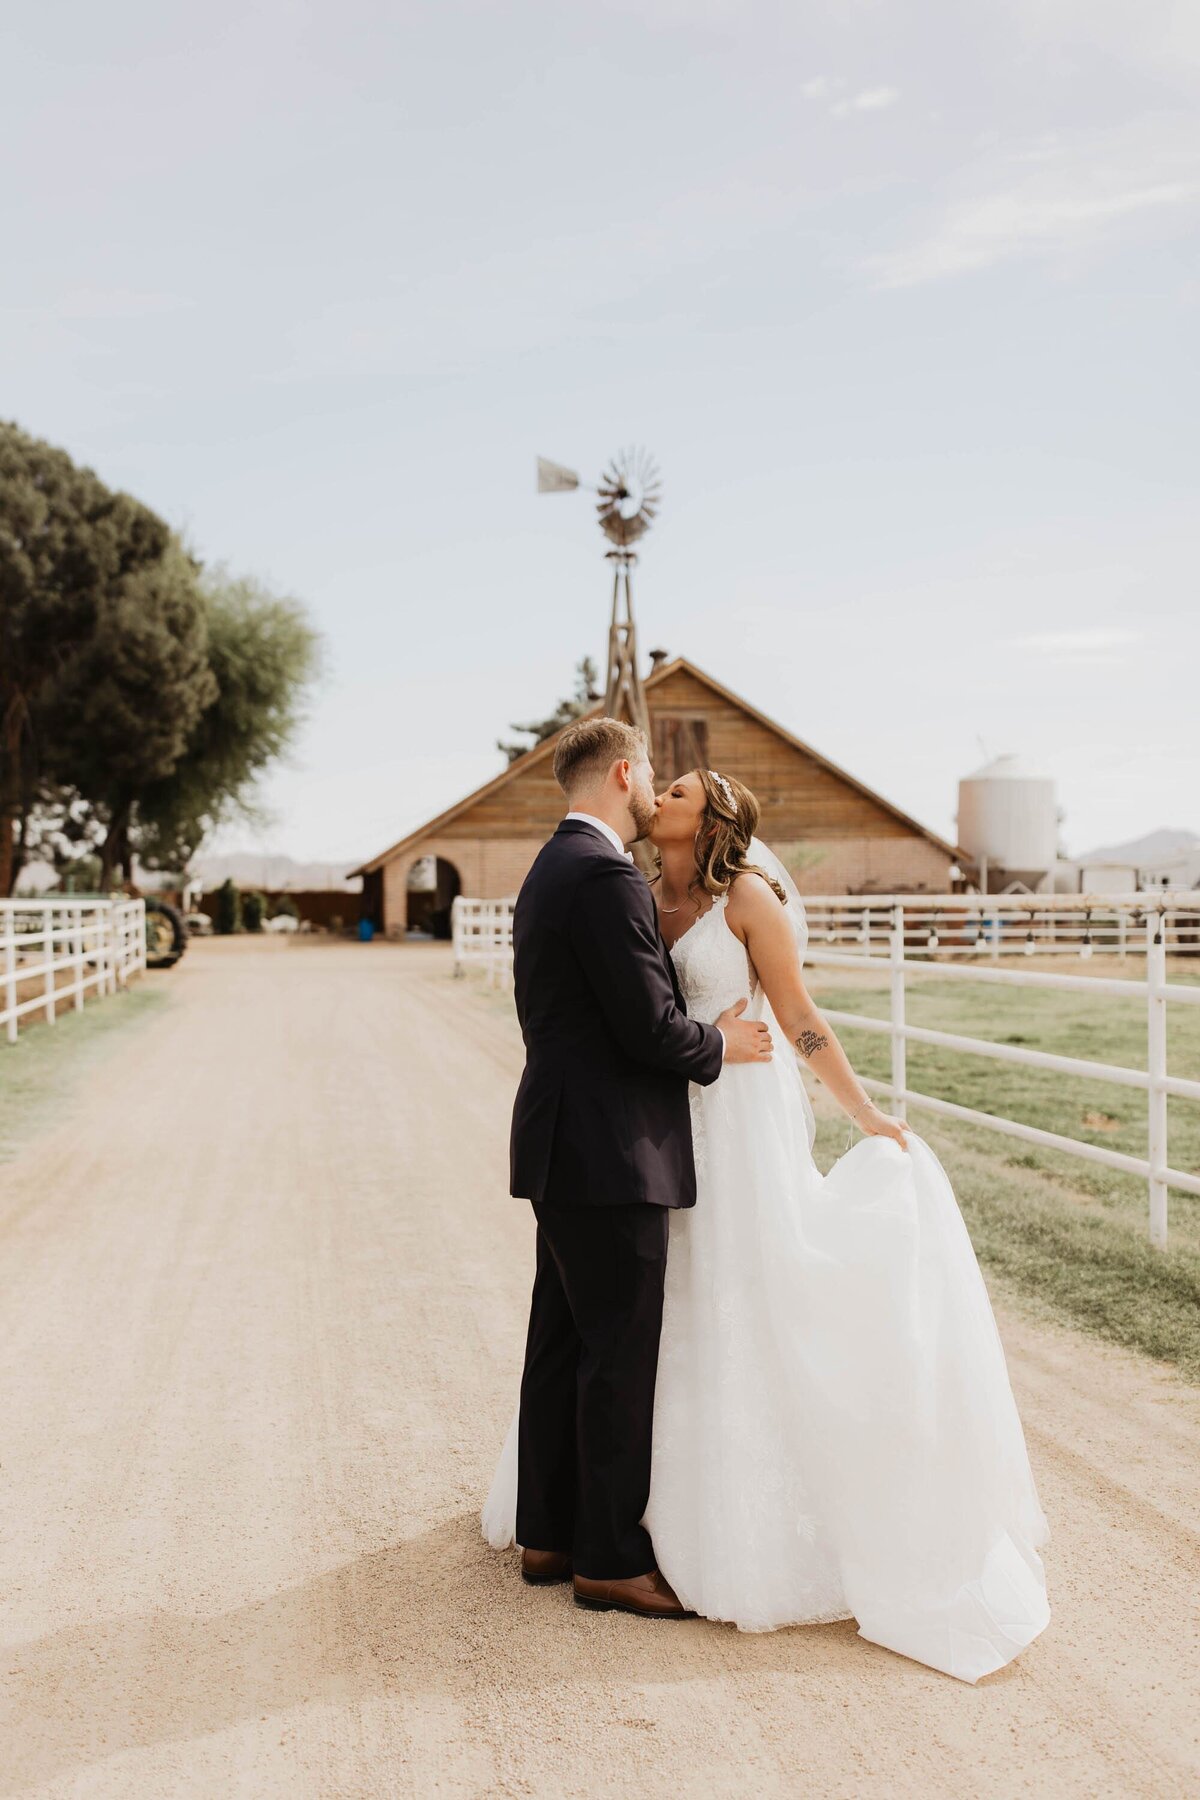 Knotty-Barn-Queen-Creek-Arizona-Wedding-Photographer-Videographer-Cam-and-Larisa-06-min